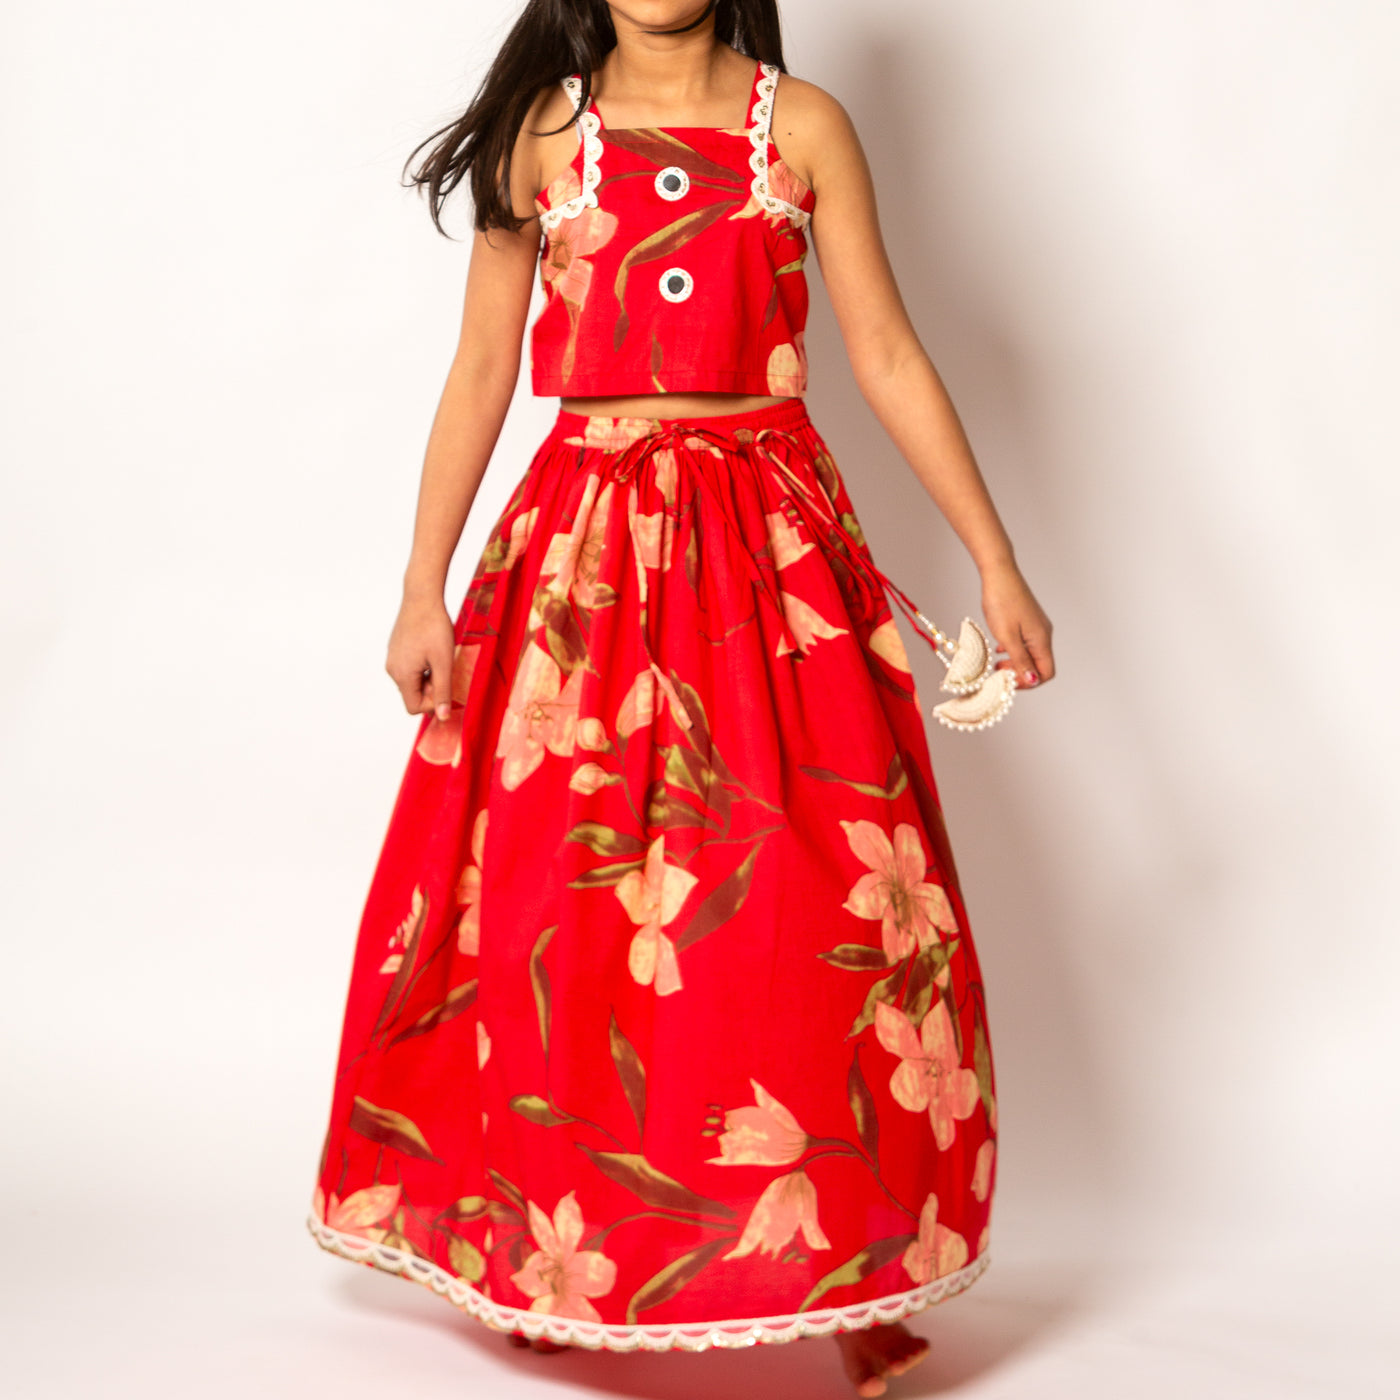 Jodha - Girls Red Floral Print Lehenga Choli Set